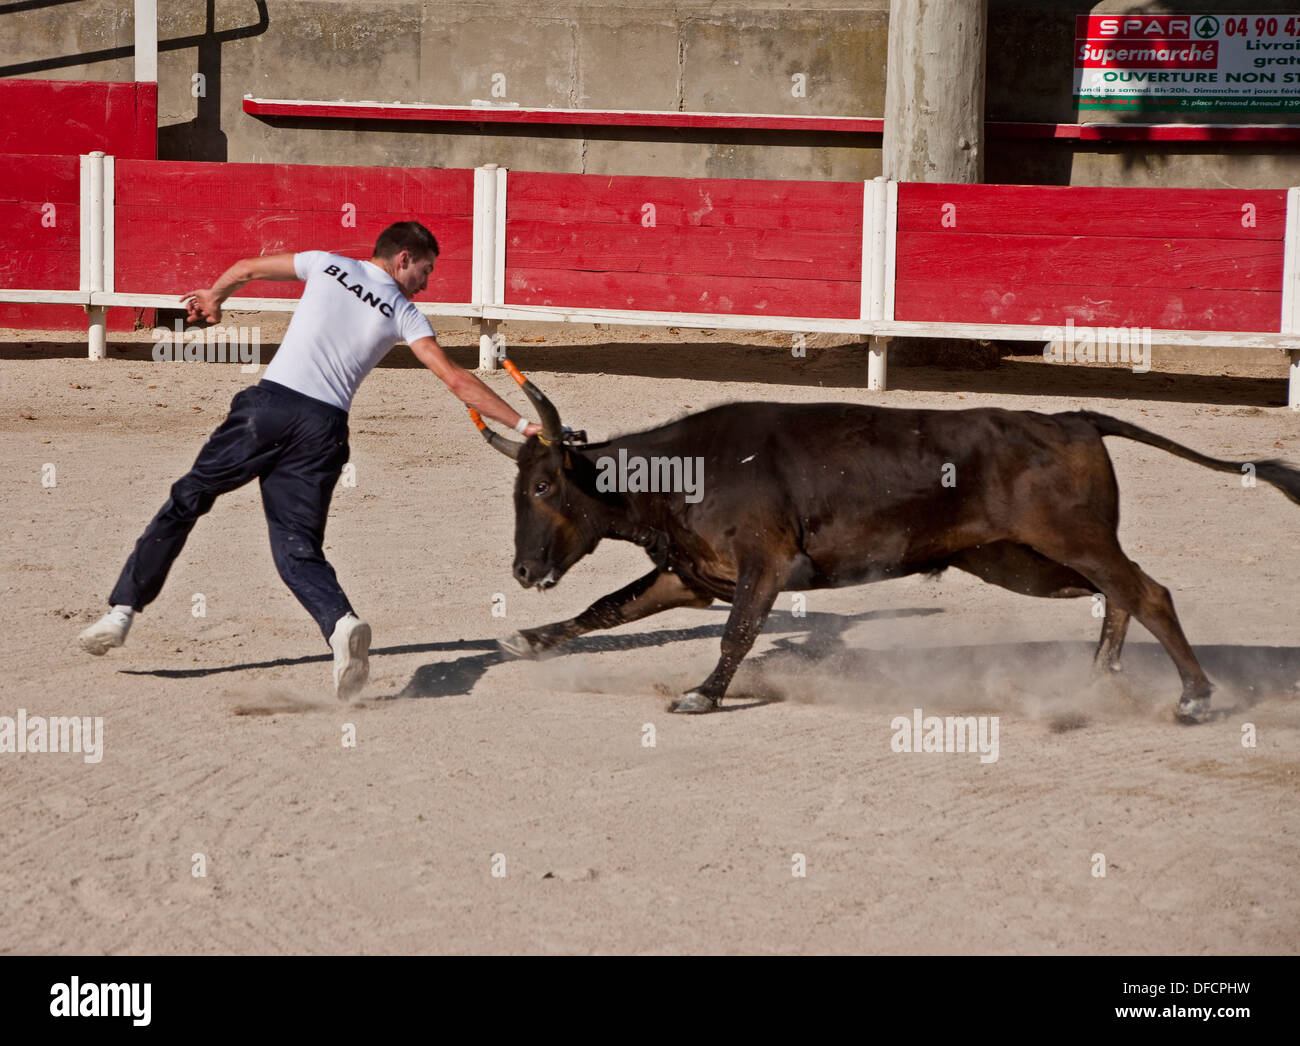 Bull Bull fighter et la tauromachie Camarguaise Cours Fontvieille France Banque D'Images